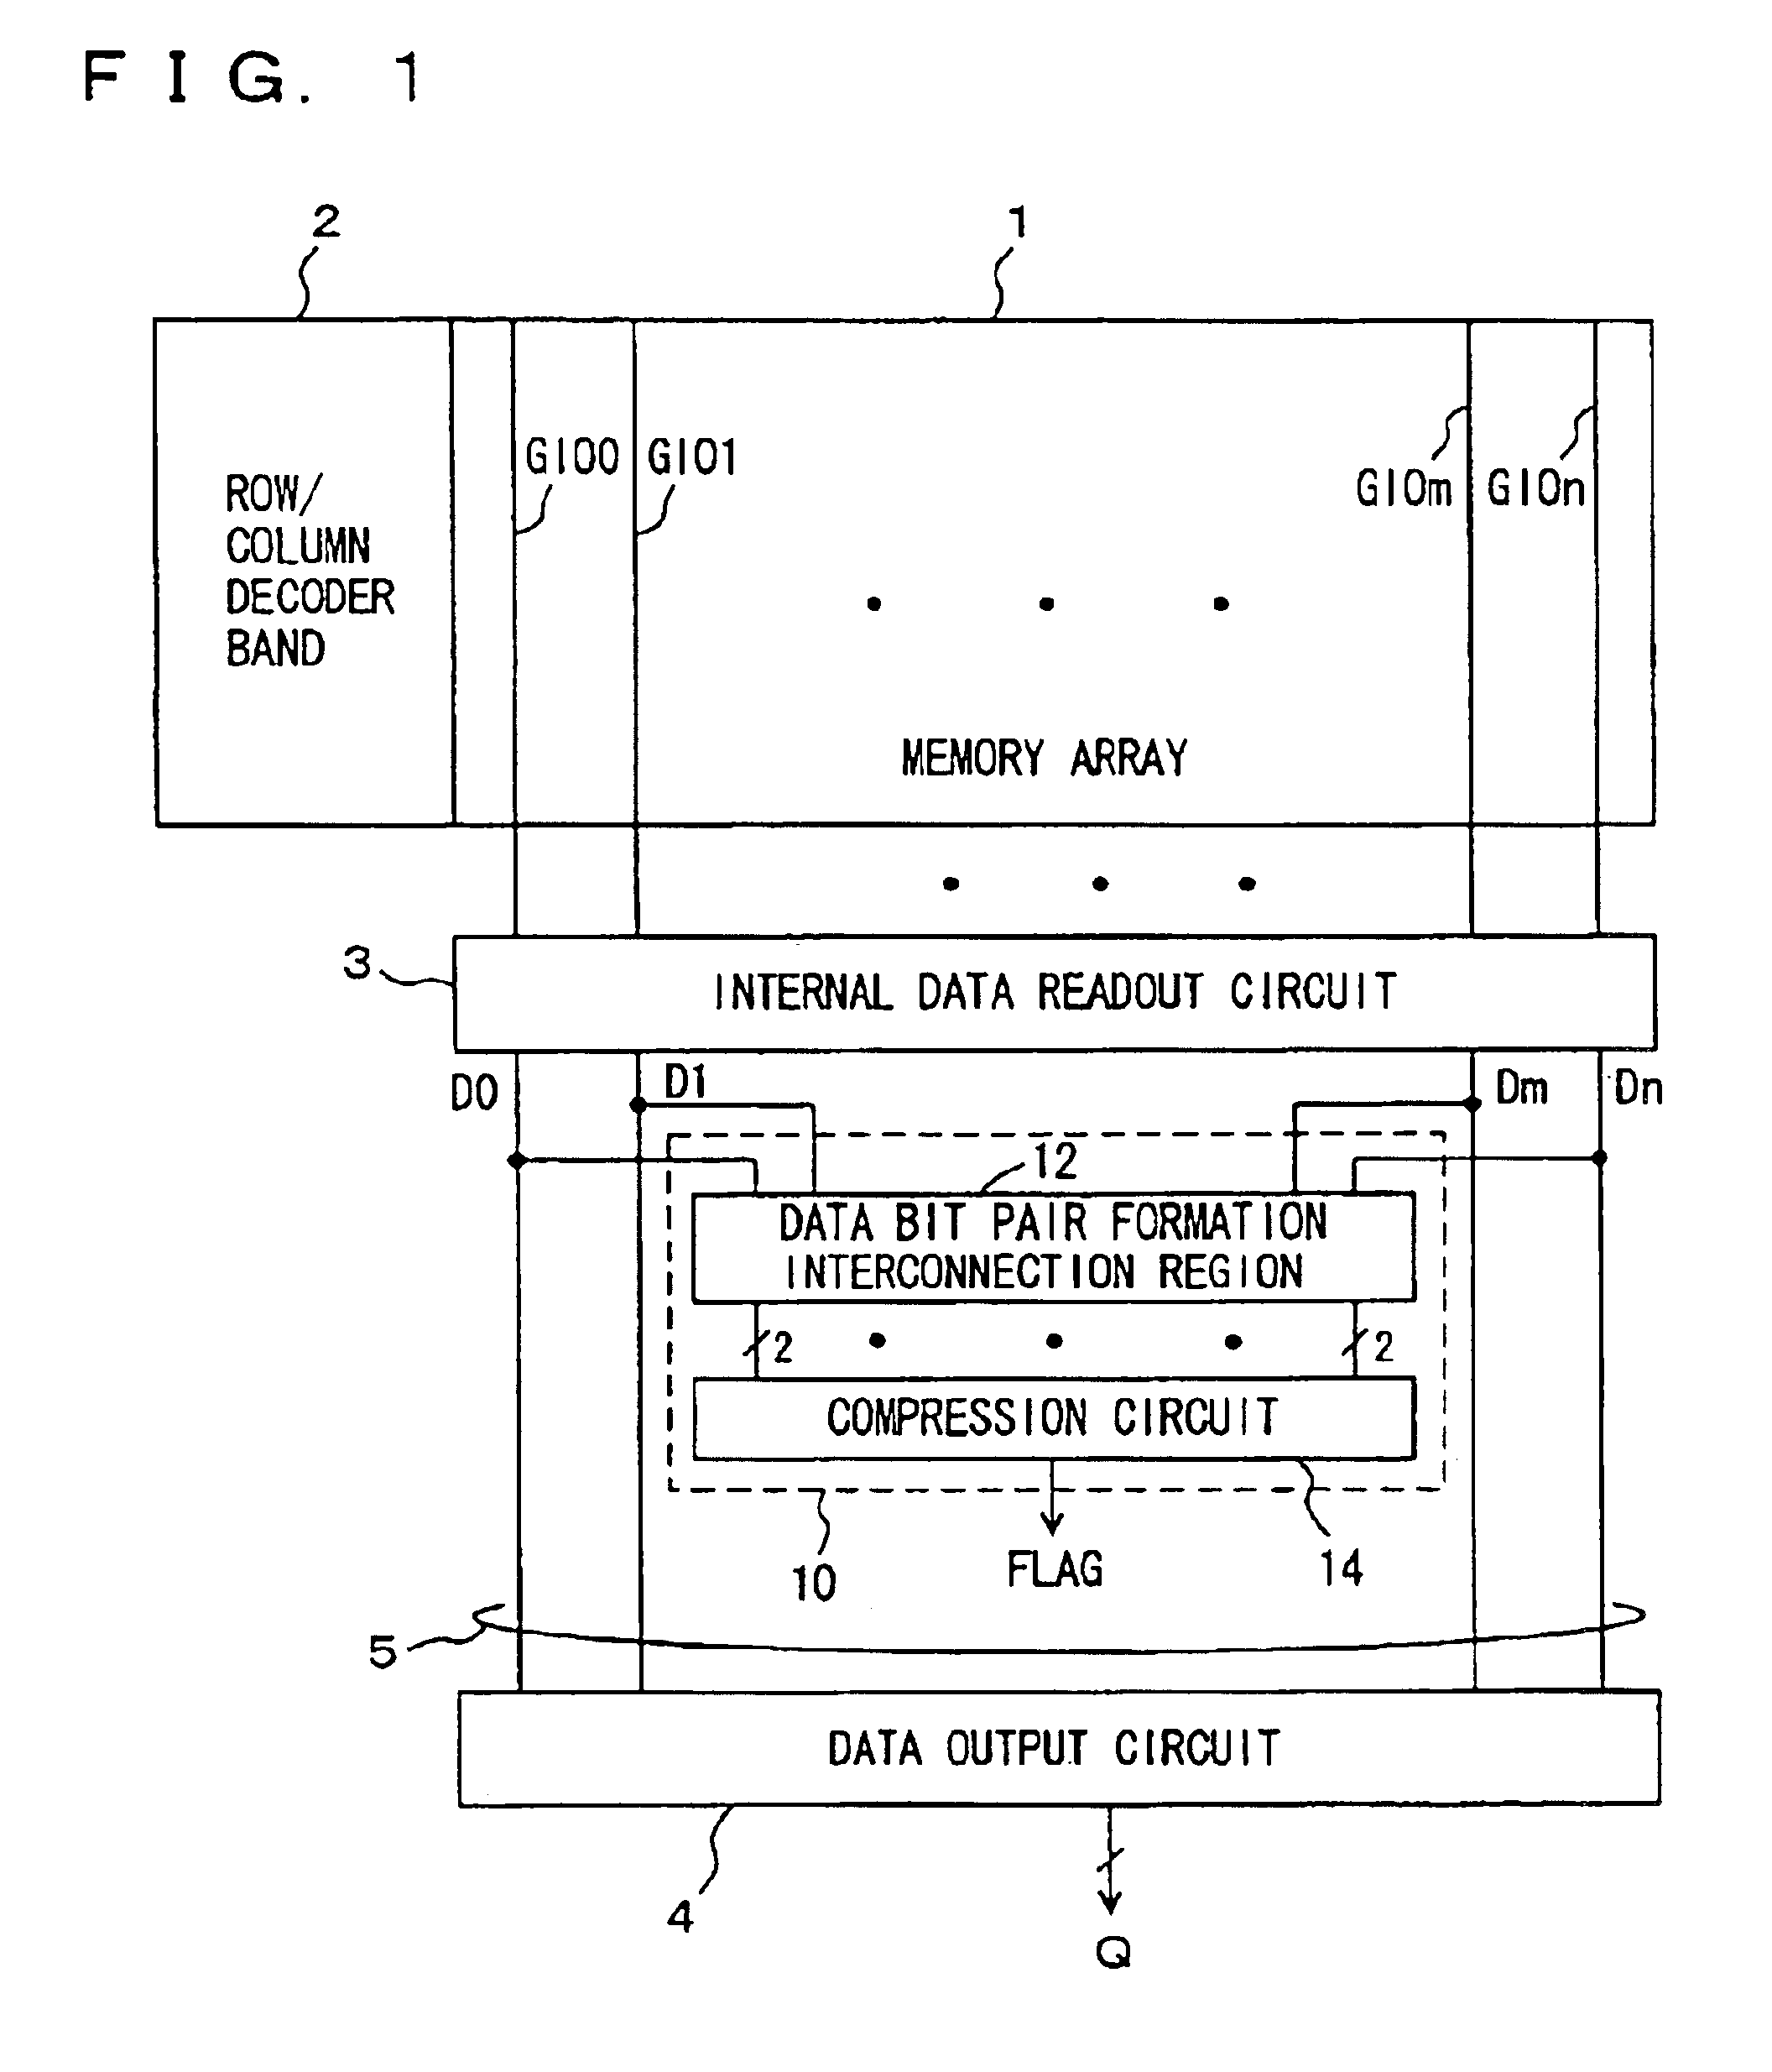 Multi-bit test circuit